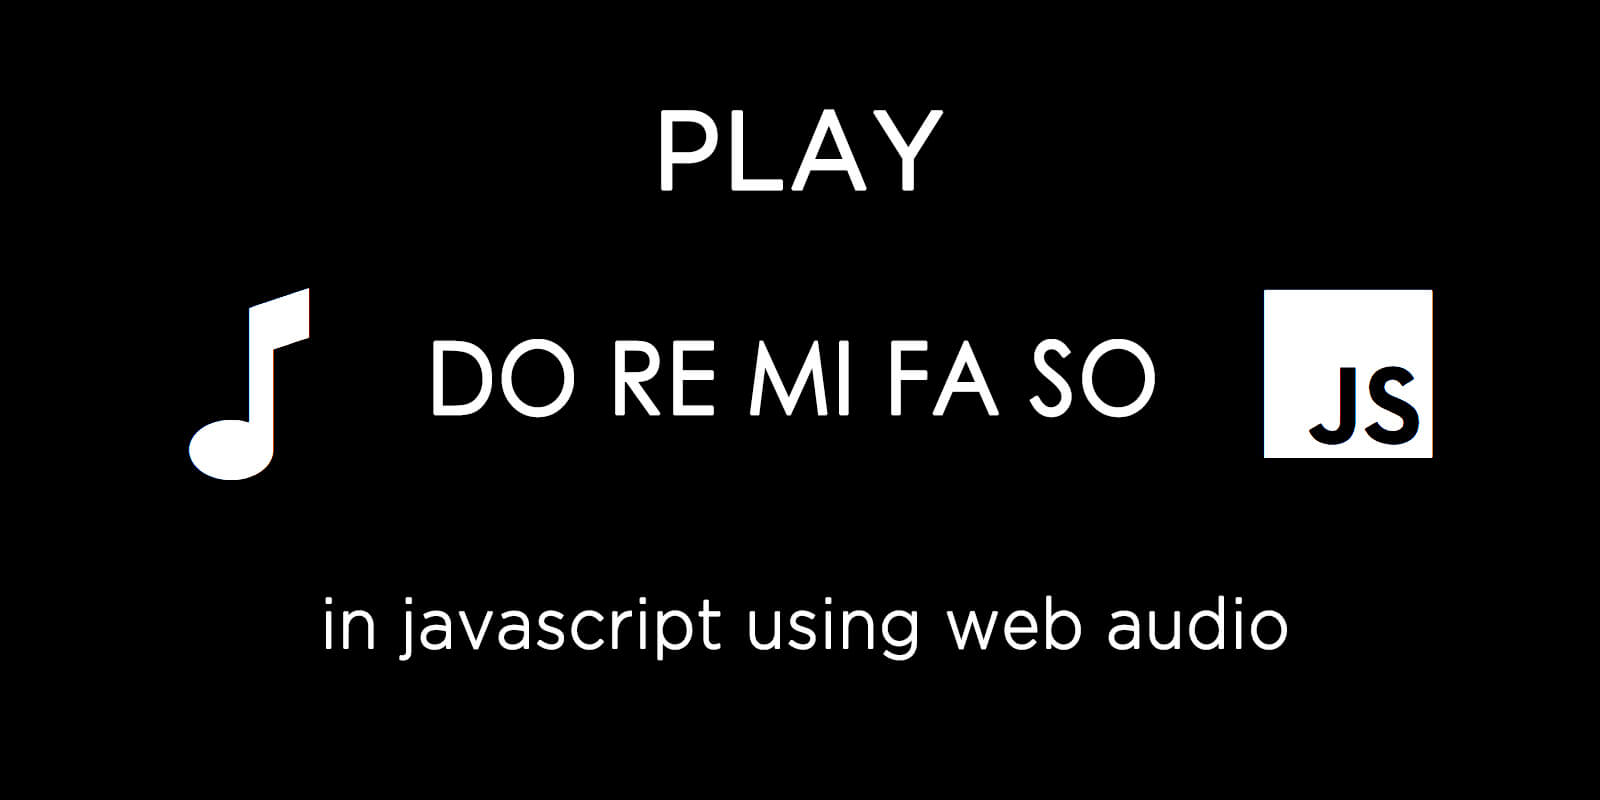 Play Do Re Mi Fa So in JavaScript